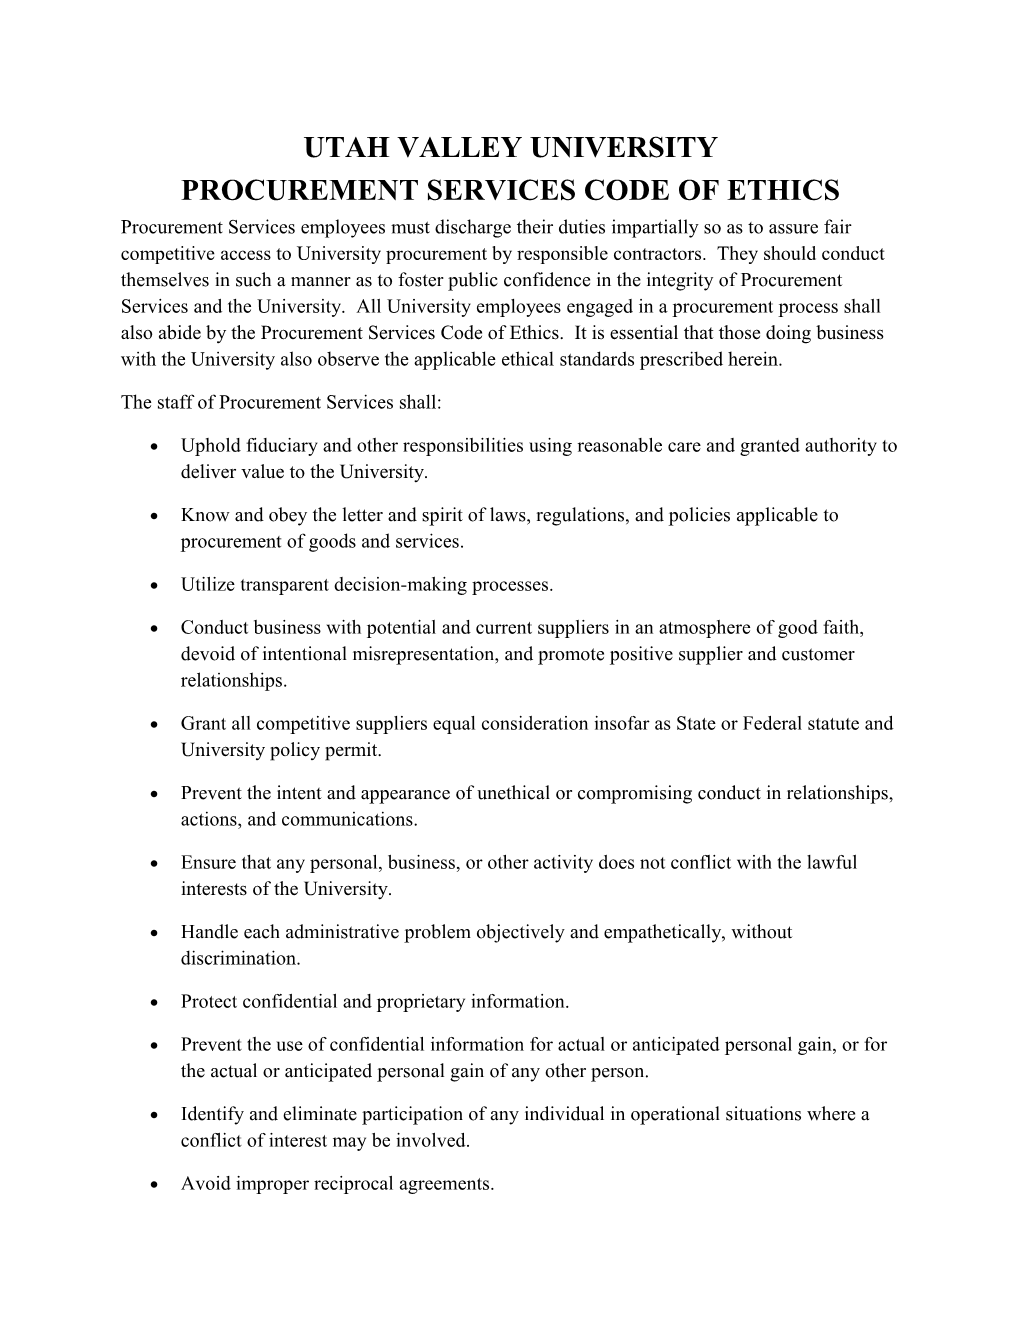 Procurement Services Code of Ethics